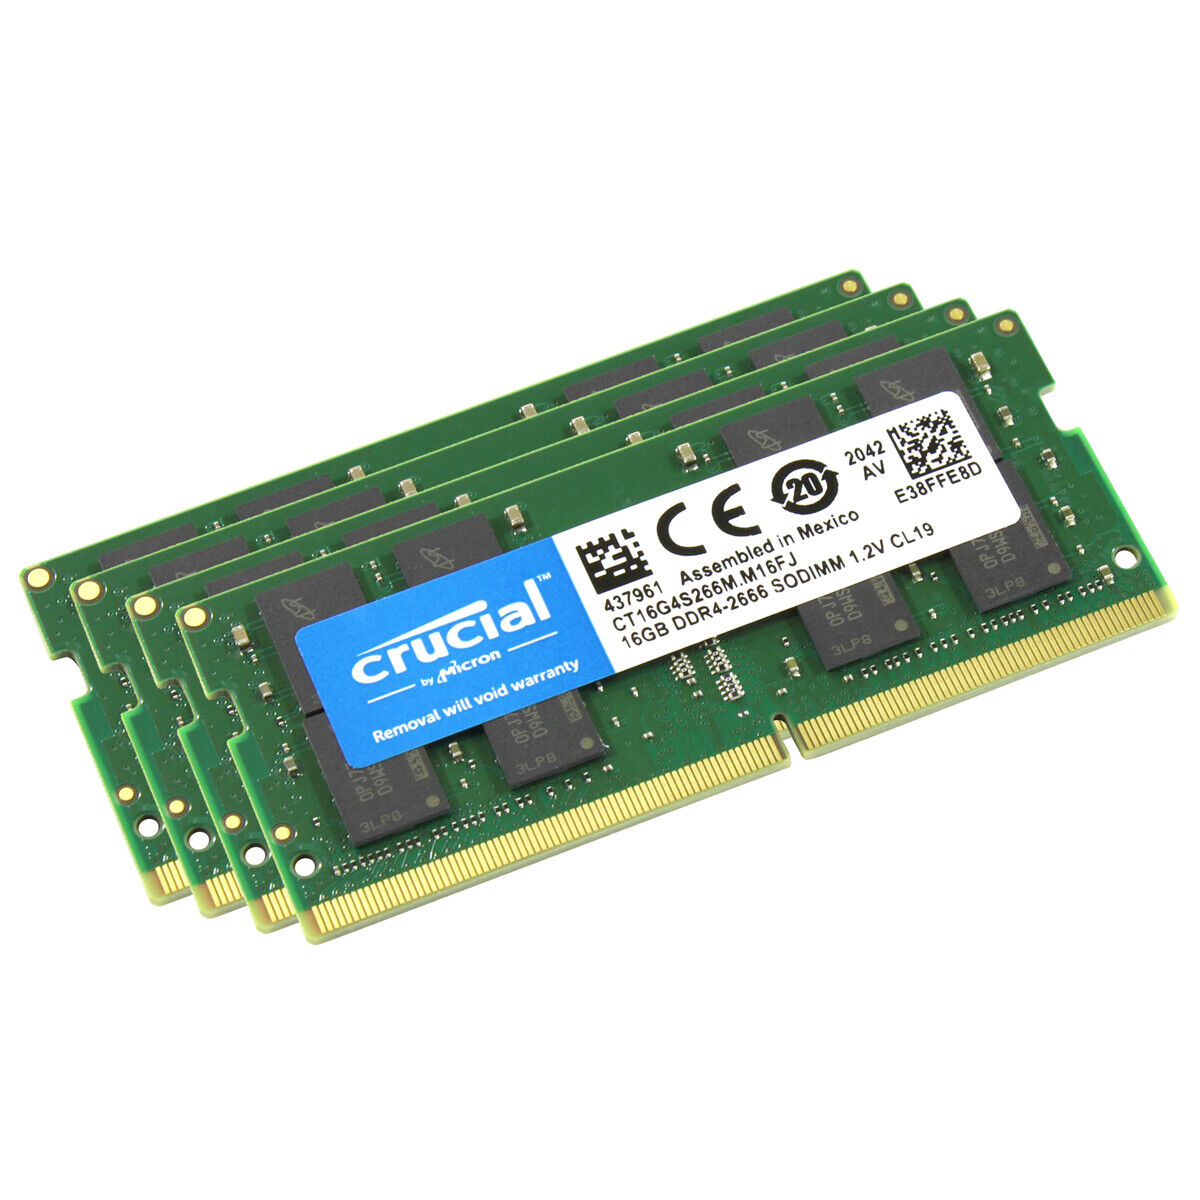 Crucial 64GB (4x 16GB) 2666MHz DDR4 SODIMM RAM PC4-21300 Laptop Memory for Mac